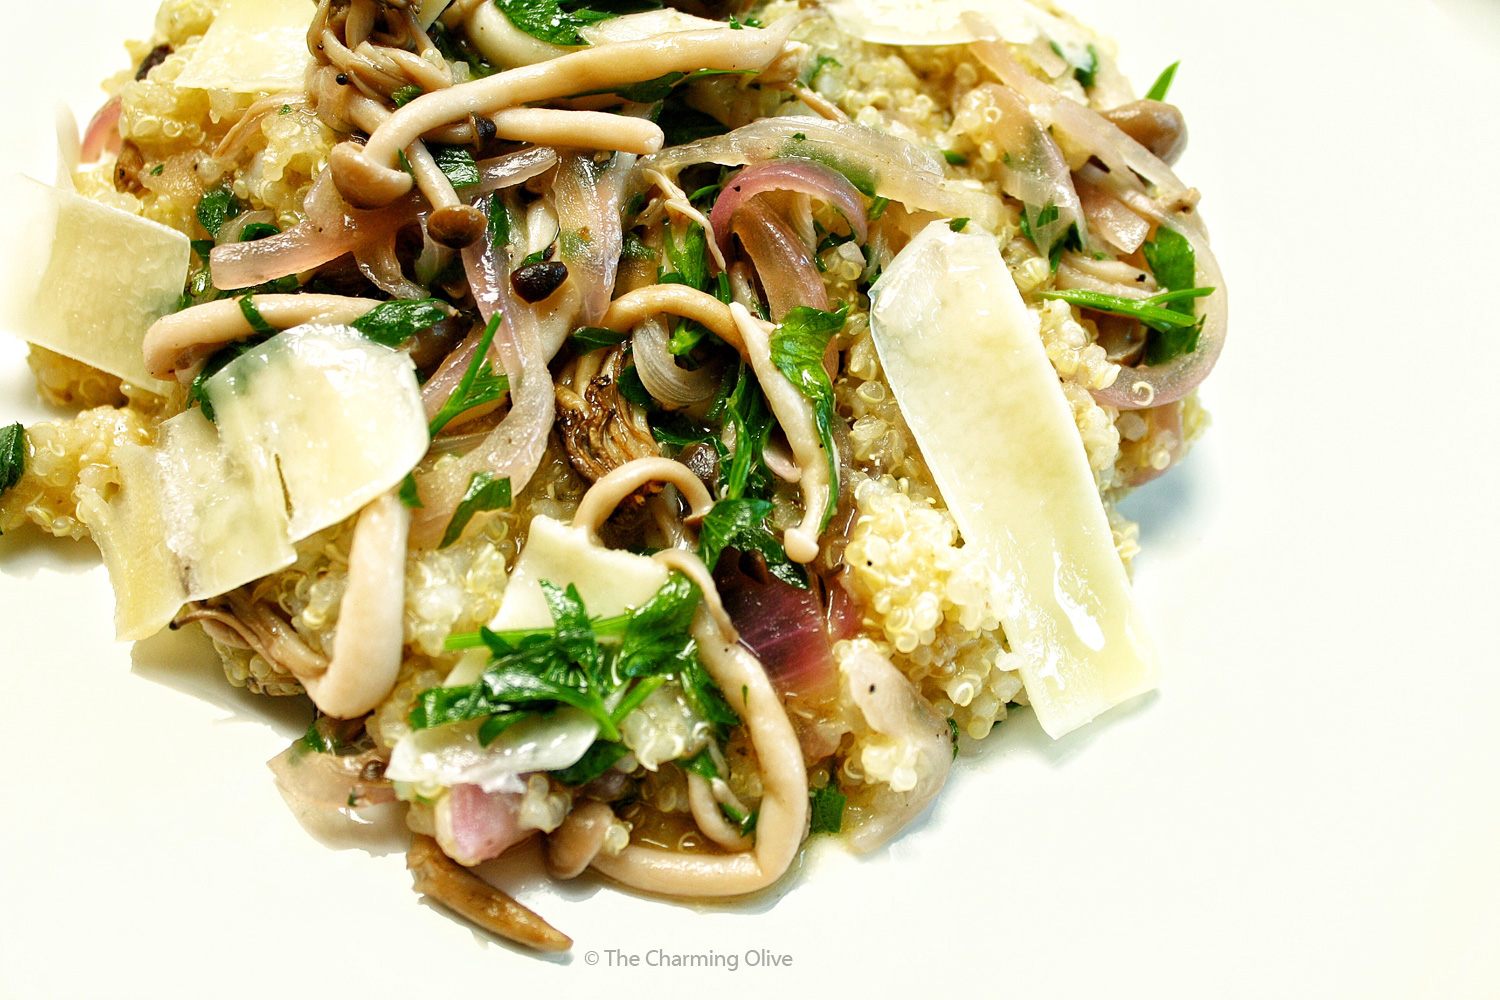 Quinoa Risotto with Mushrooms and Truffles Recipe